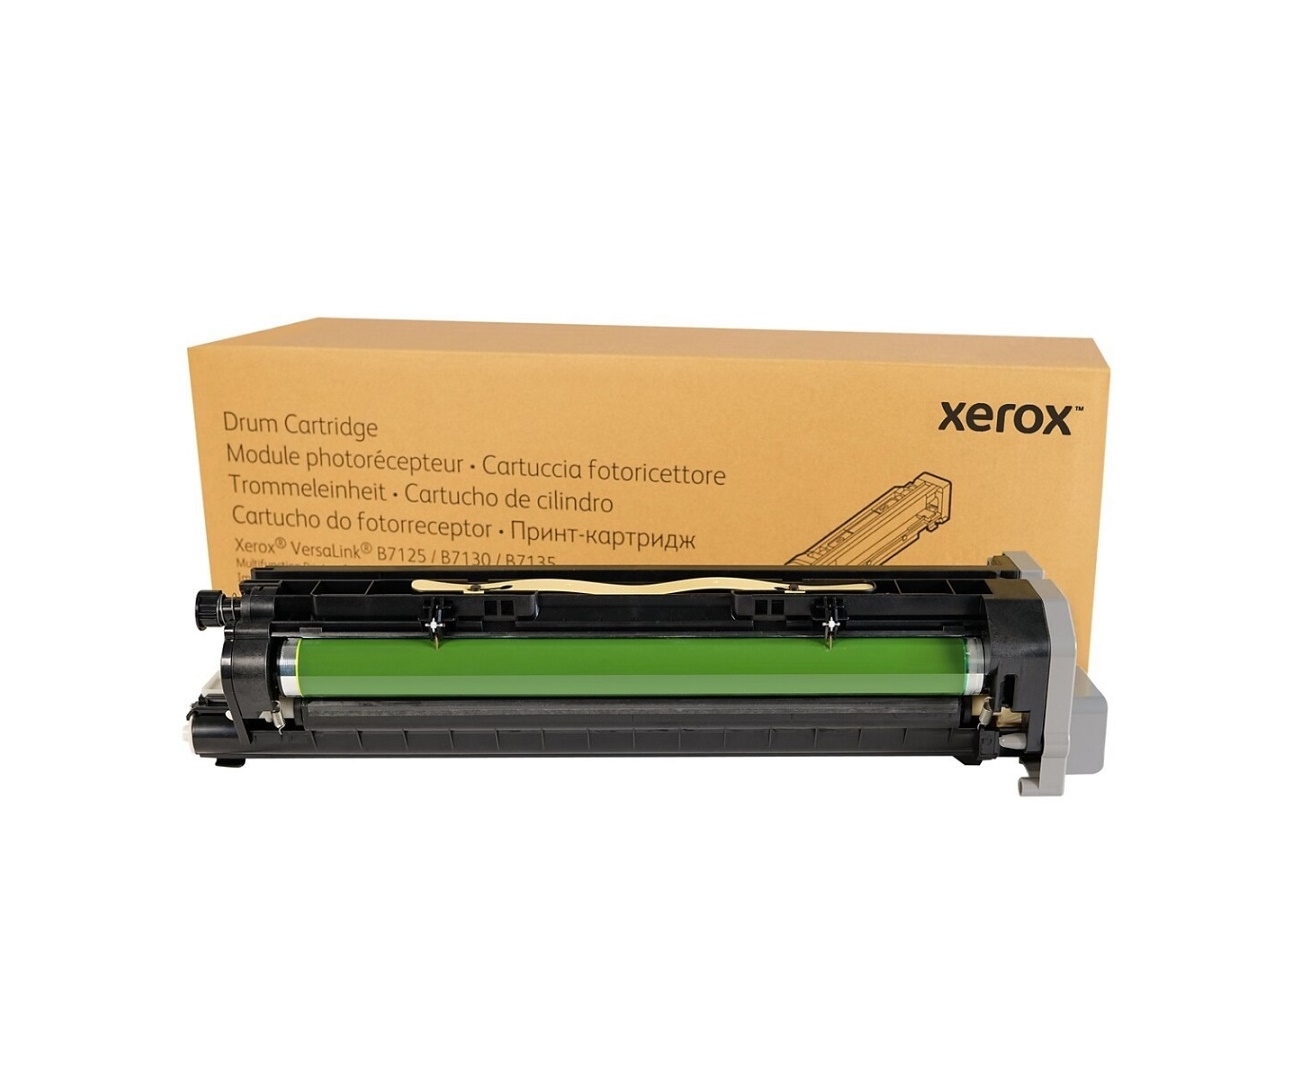 Xerox Original Drum Cartridge Black 013R00687